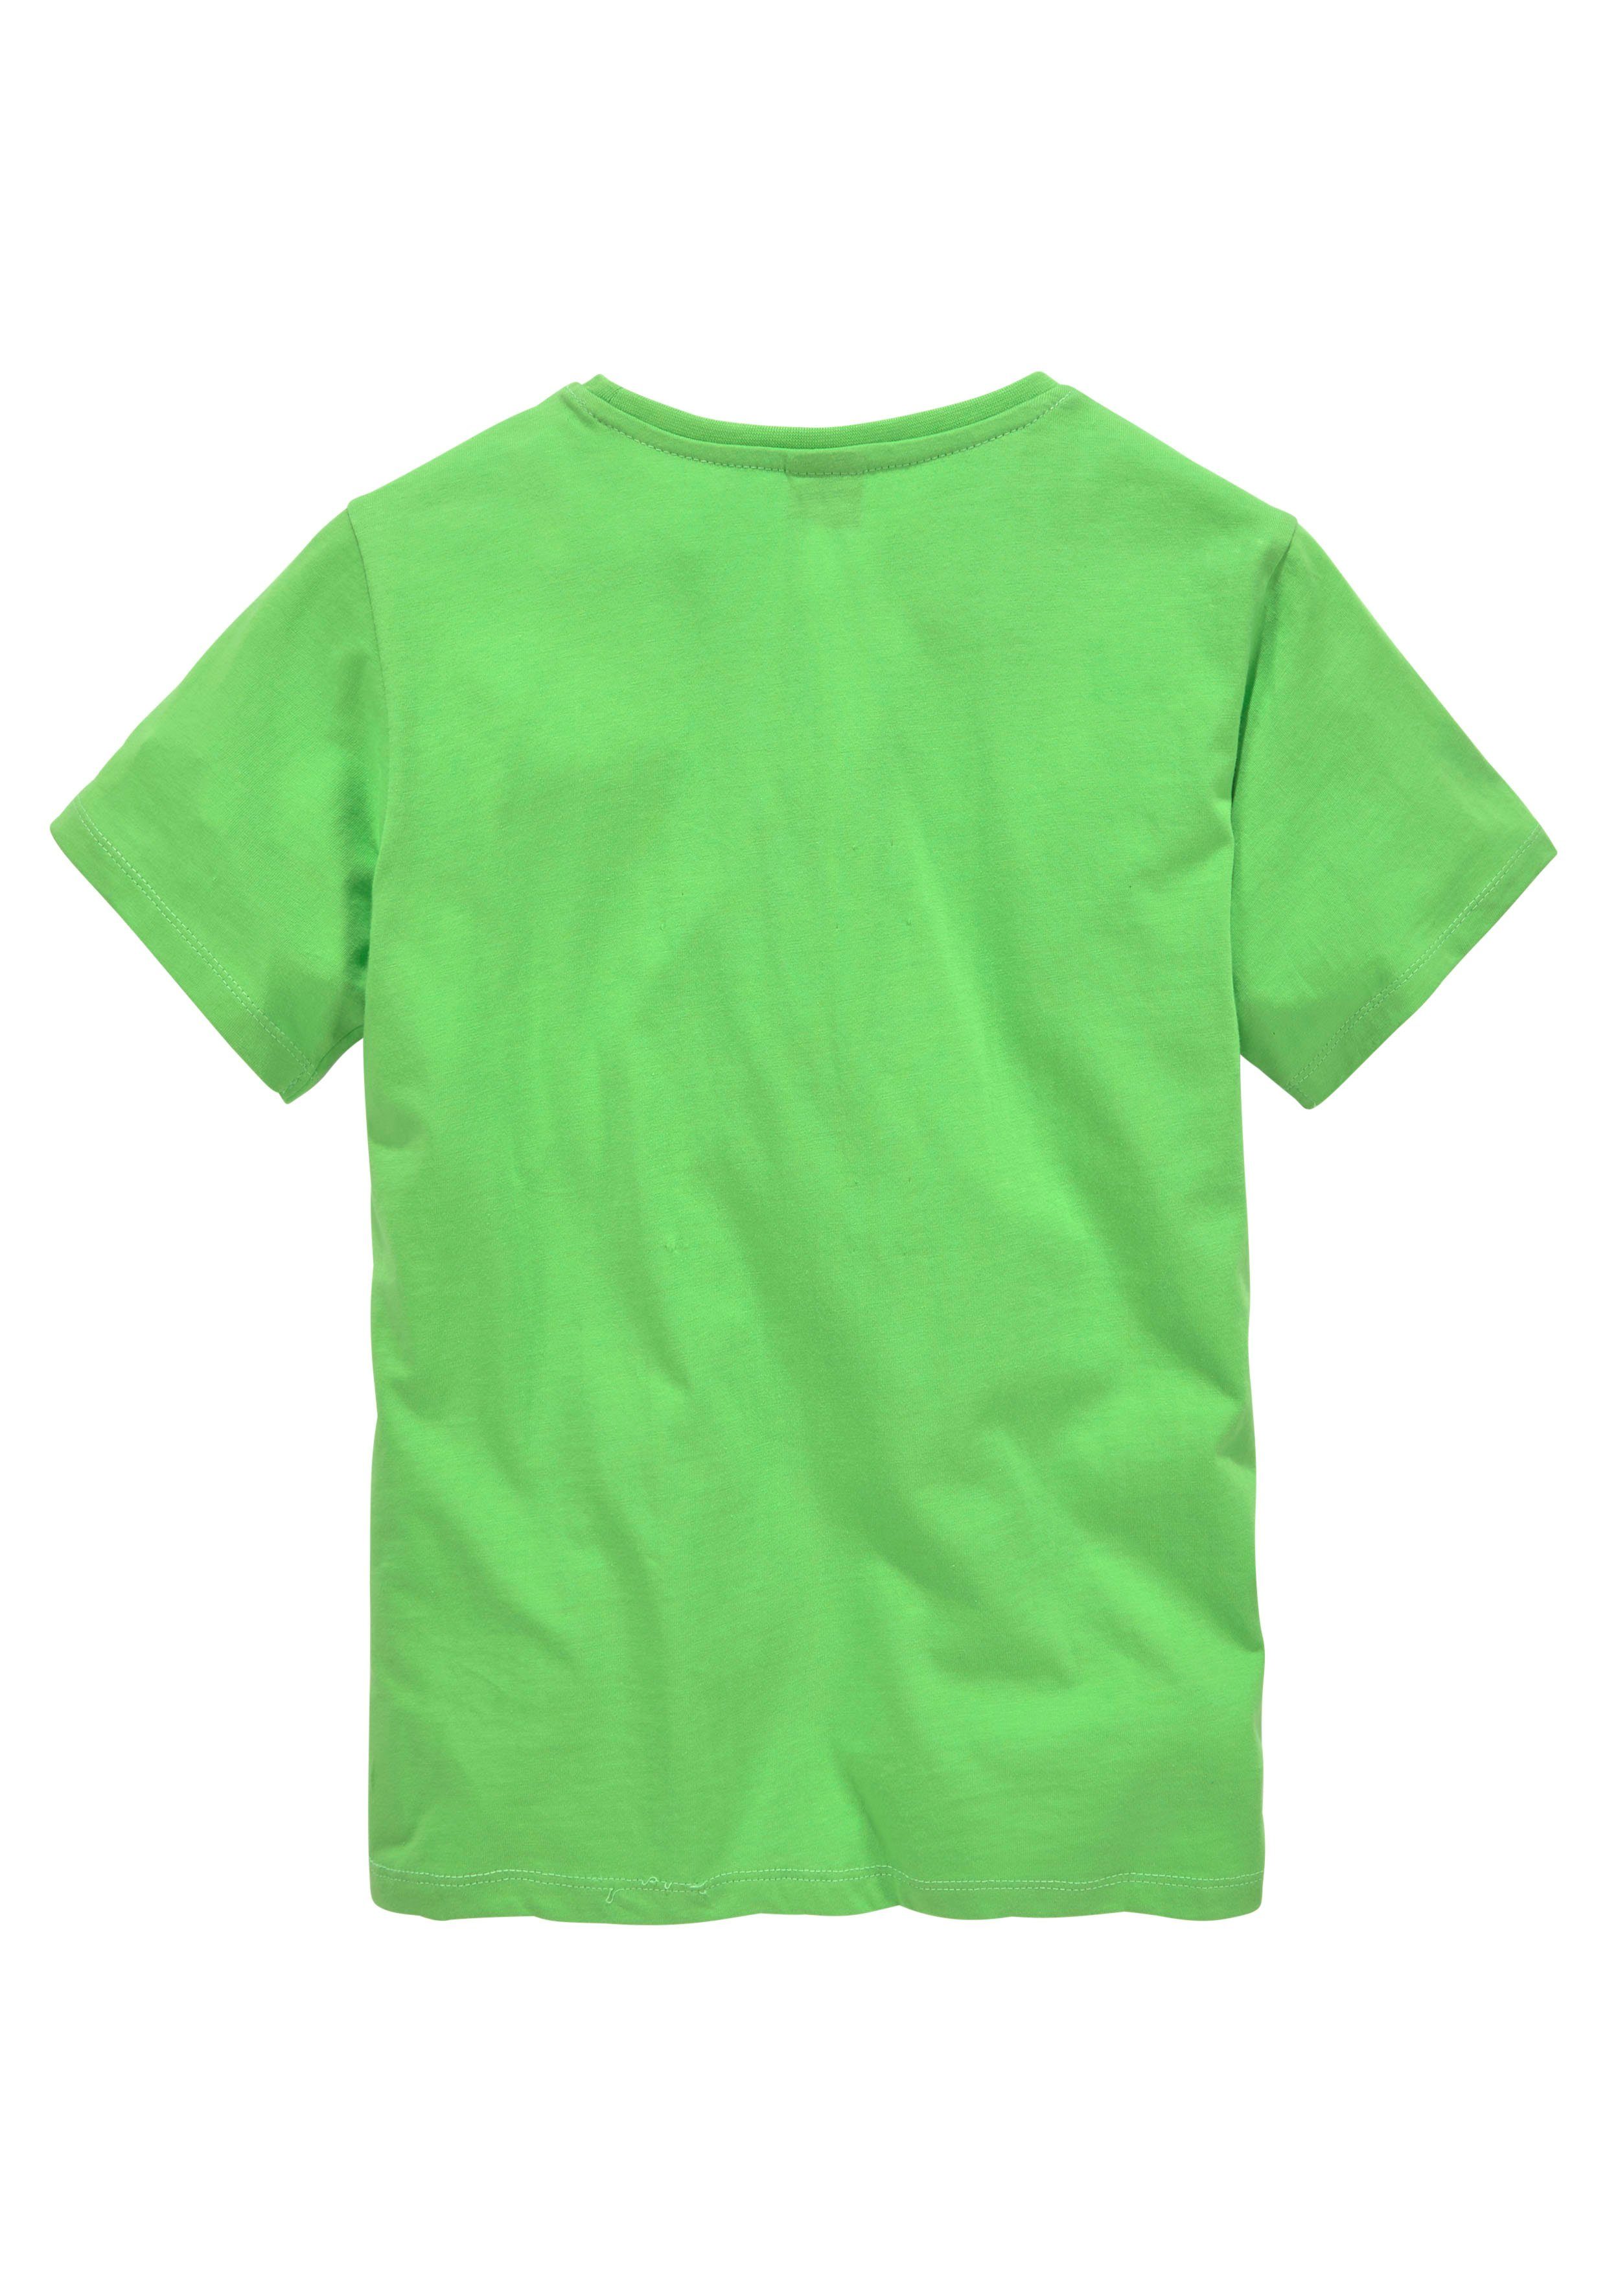 CHILL MAL, Spruch KIDSWORLD T-Shirt